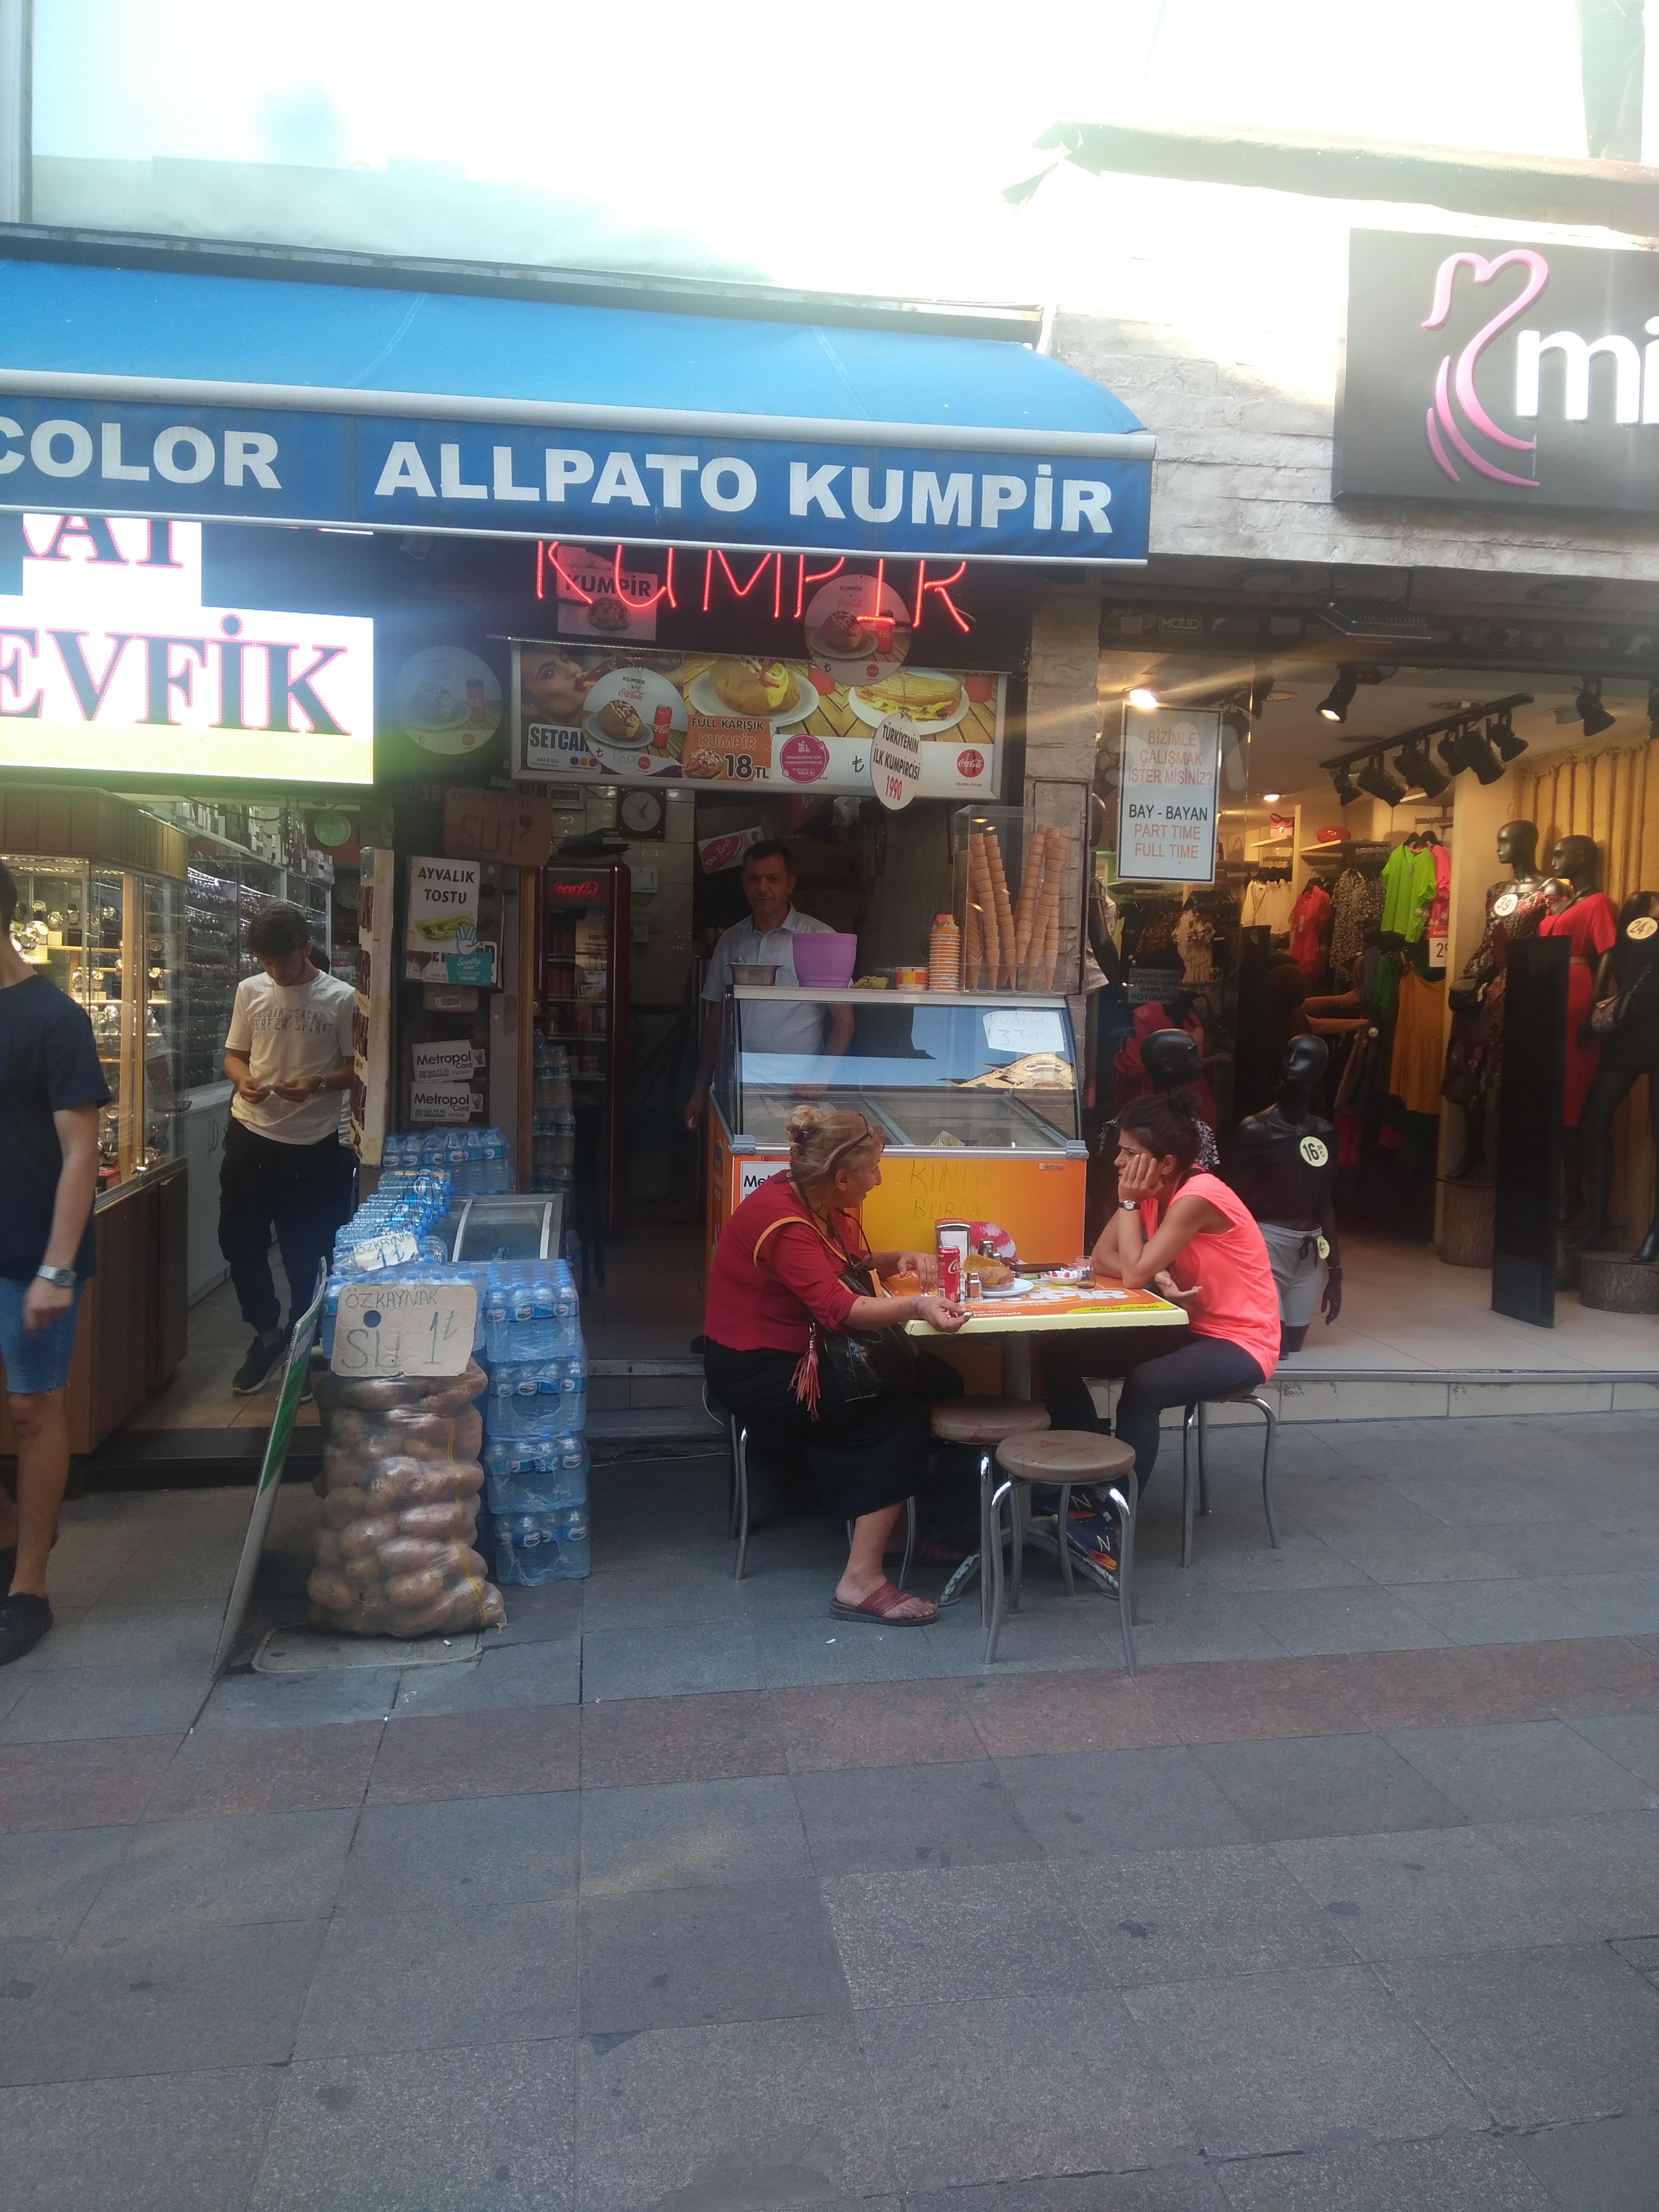 Allpato Kumpir , Türkiye’nin ilk kumpircisi